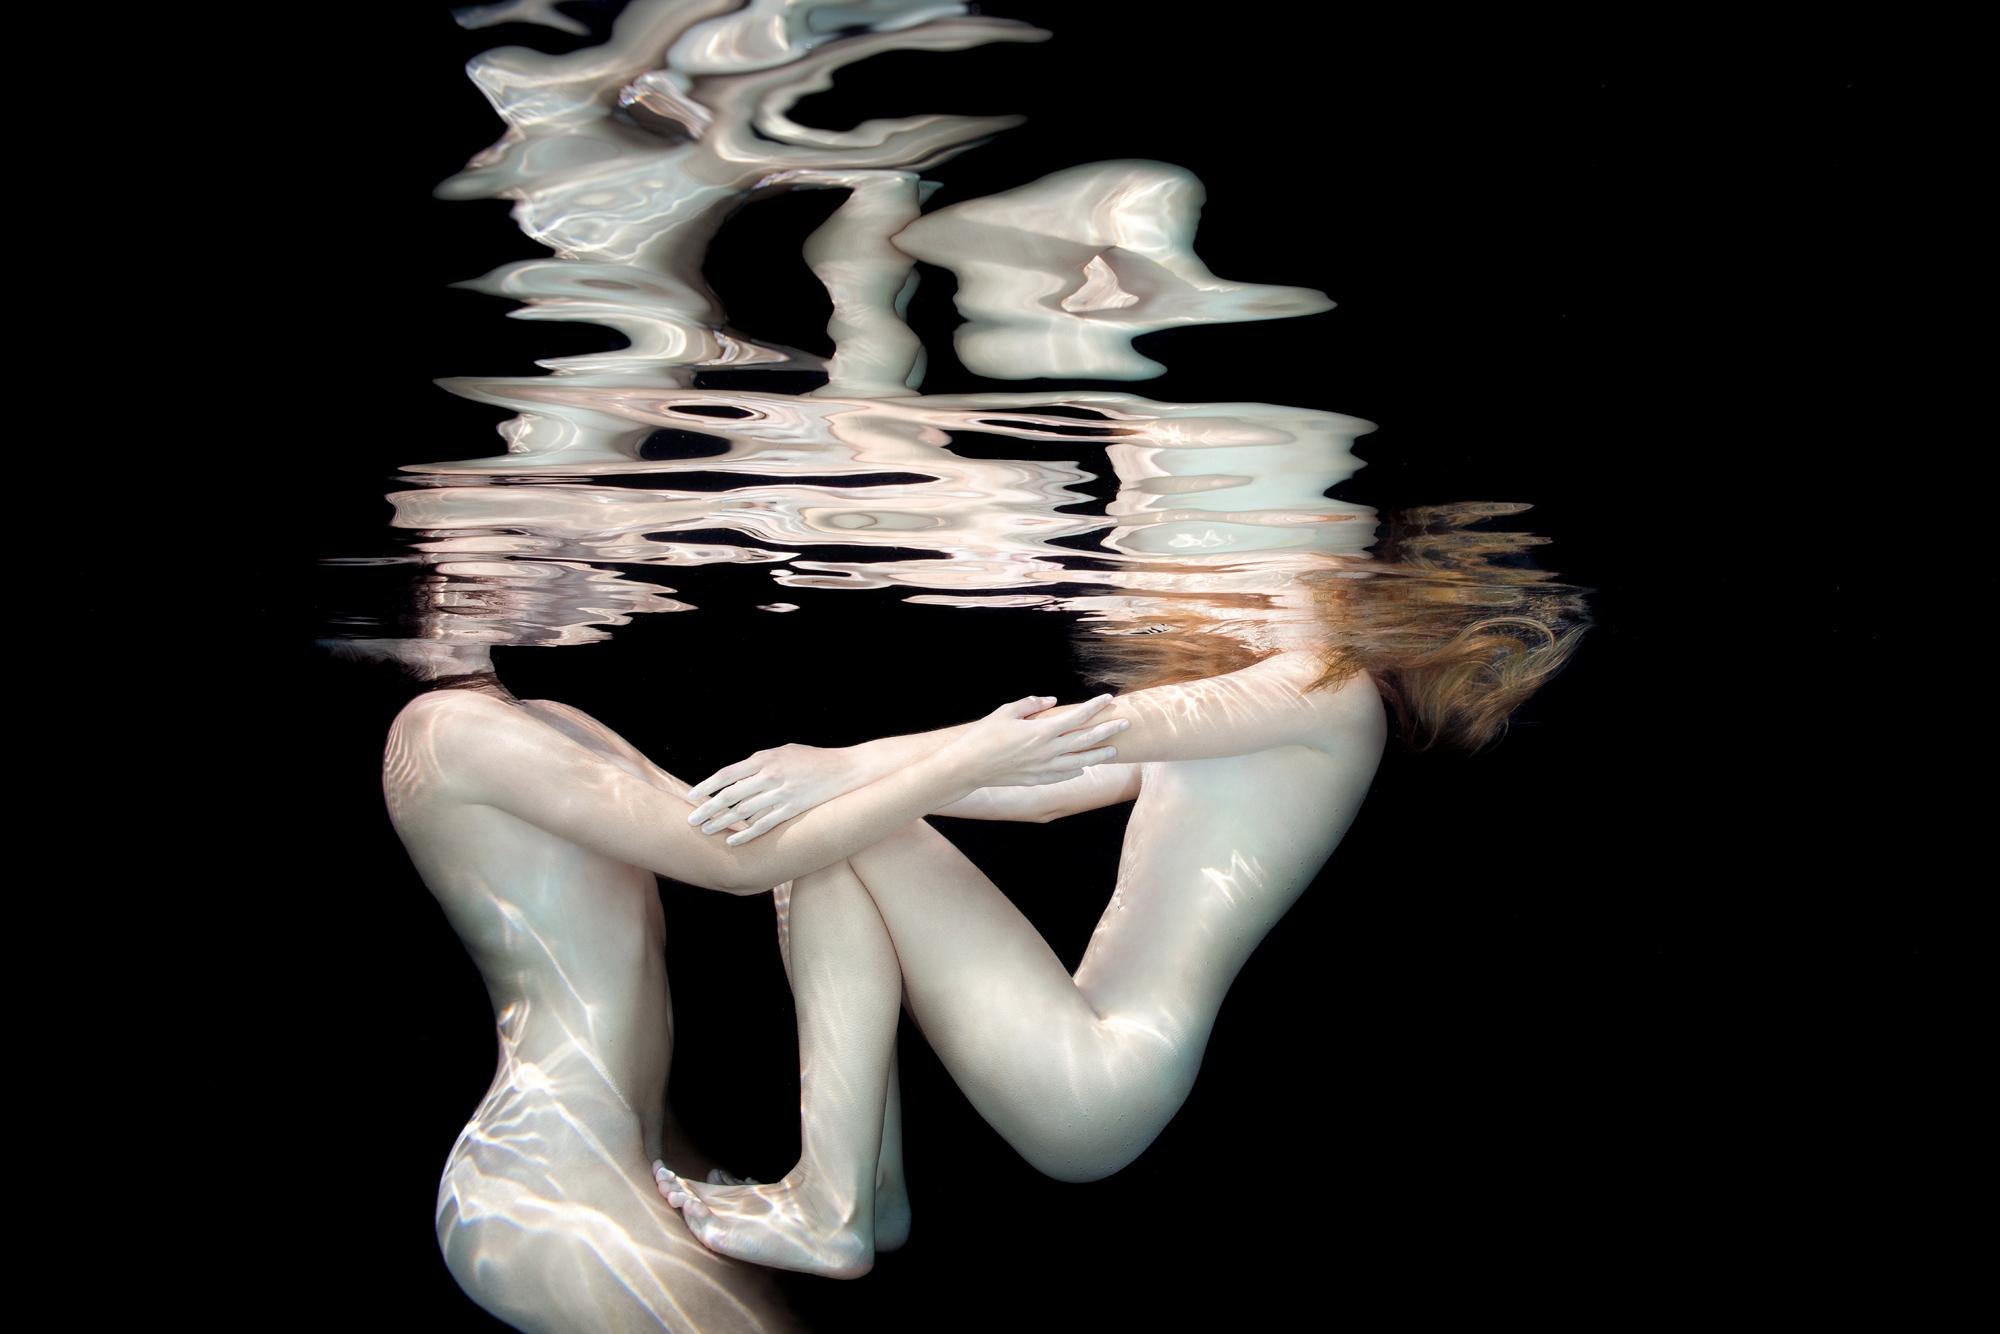 Alex Sher Nude Photograph - Porcelain  - underwater nude photograph - archival pigment print 24" x 35"